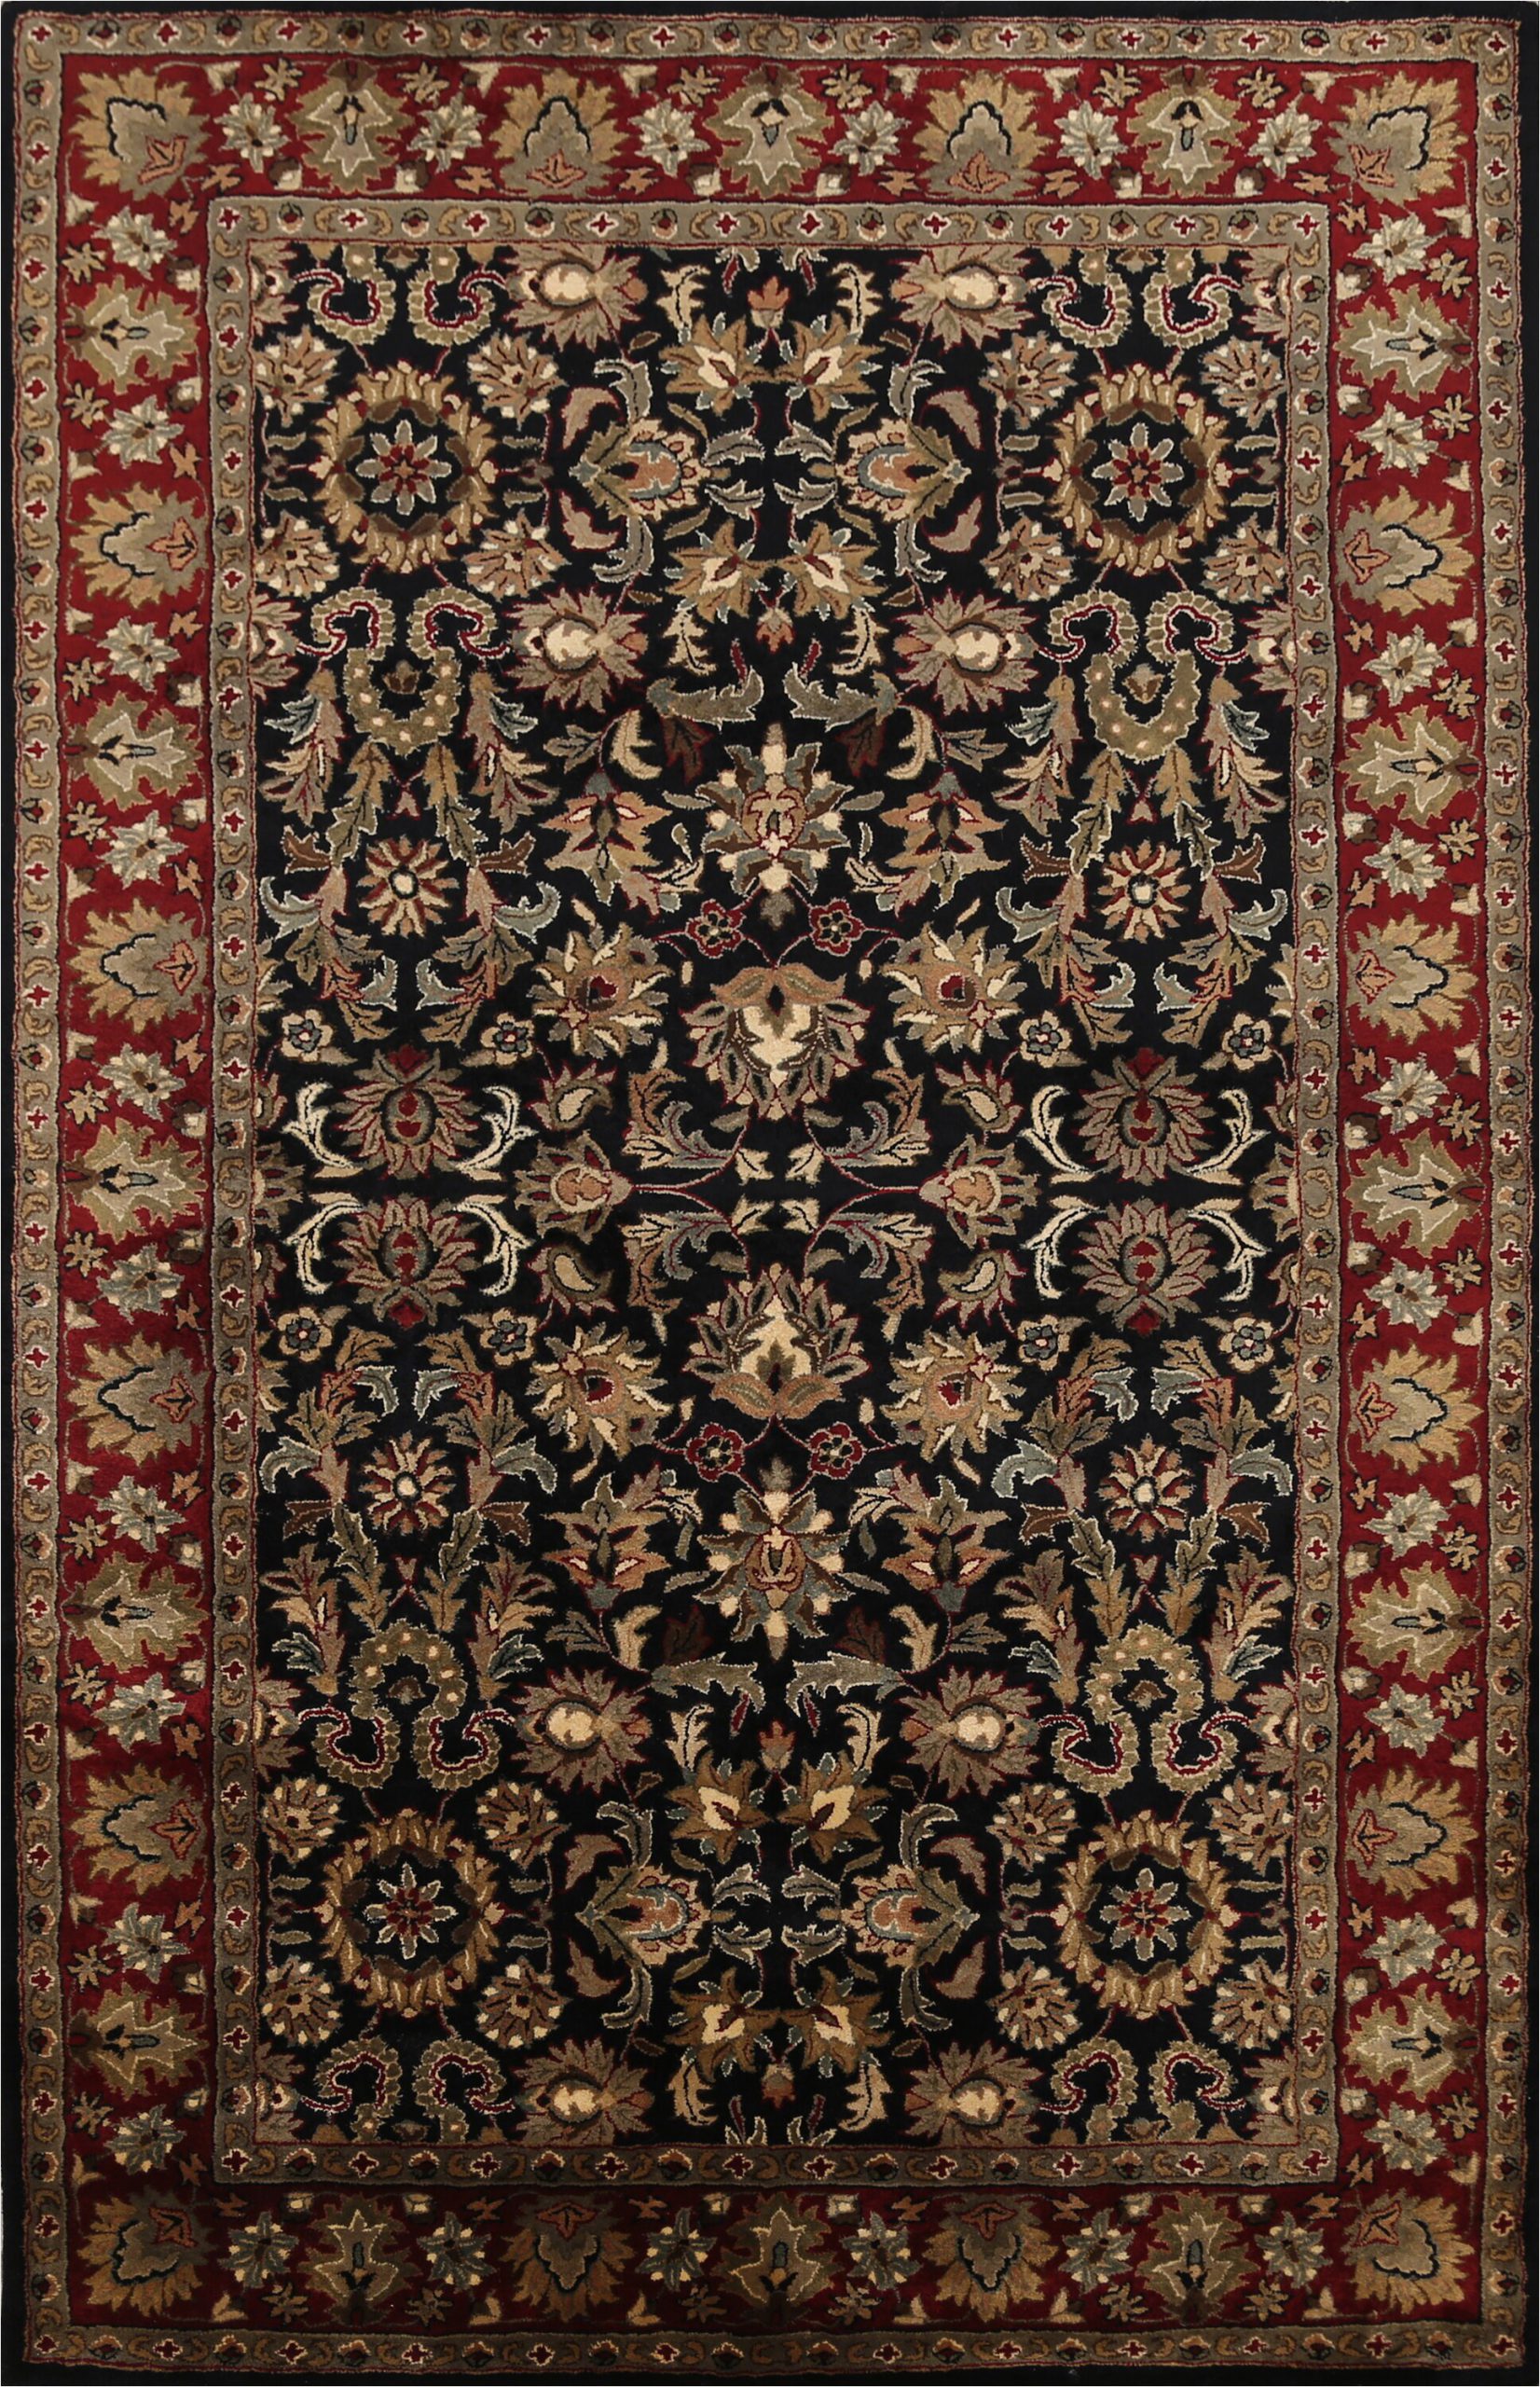 oriental handmade tufted wool blackbrownred area rug